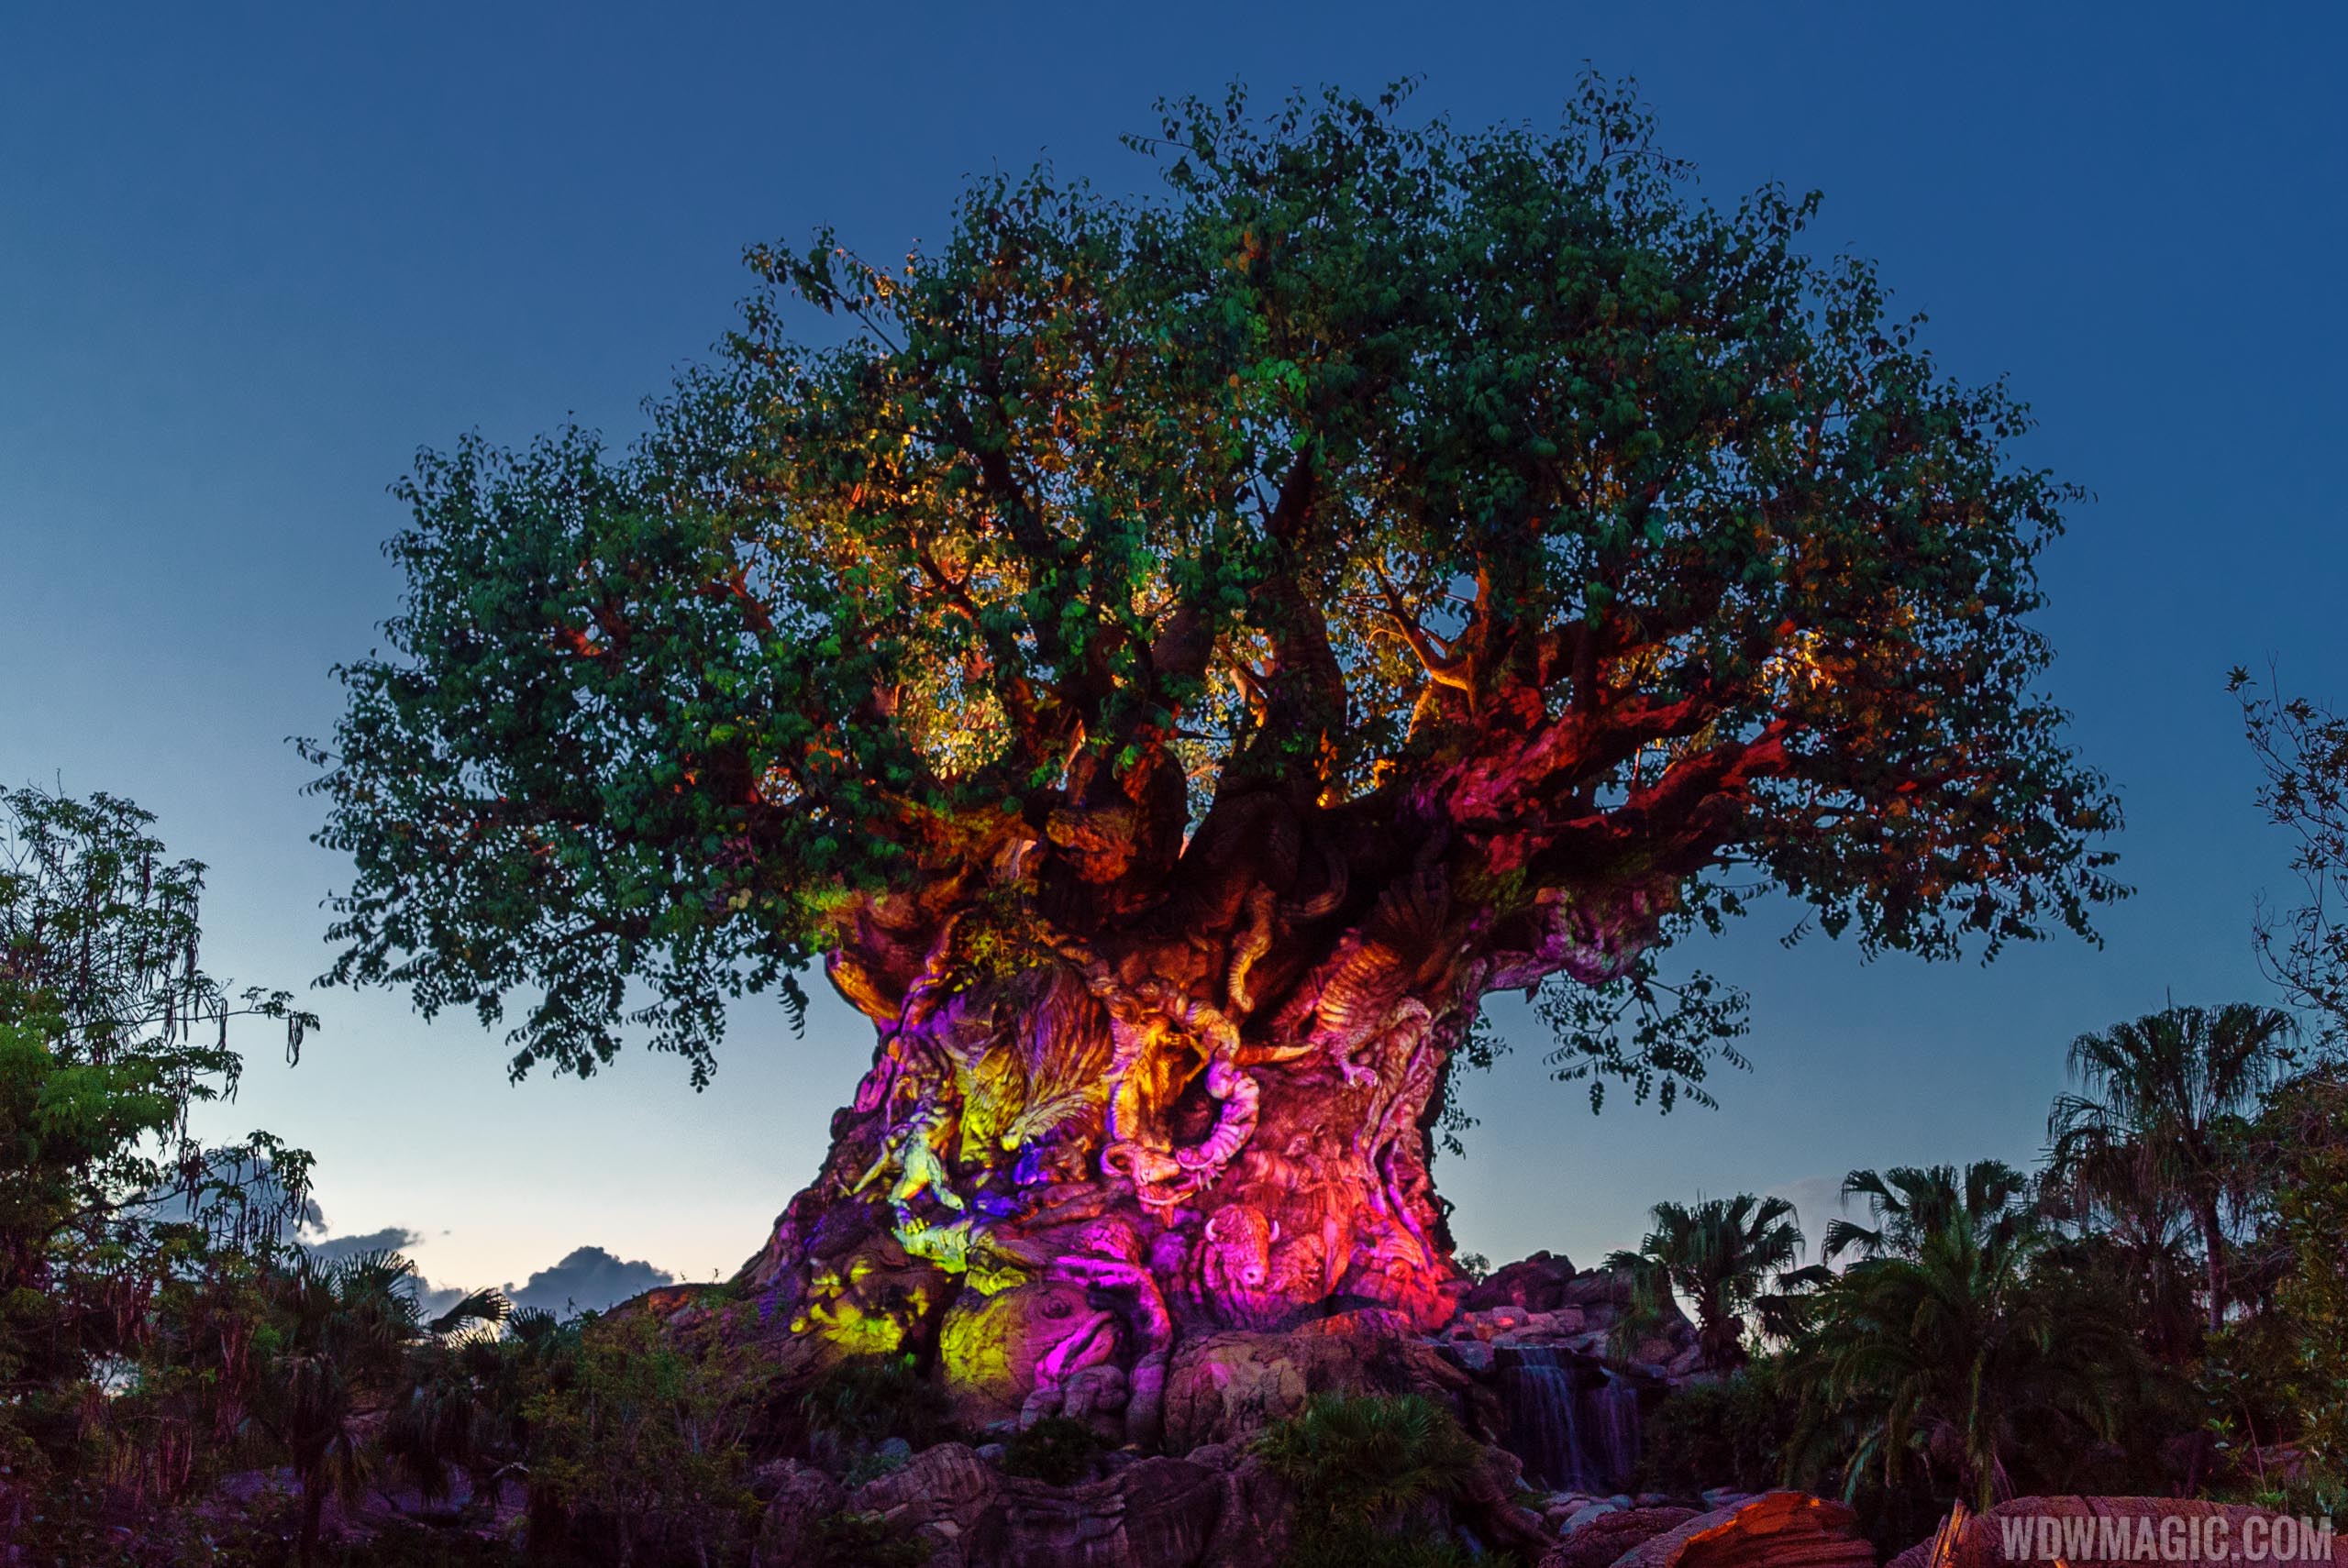 disney magic kingdom park orlando Disney